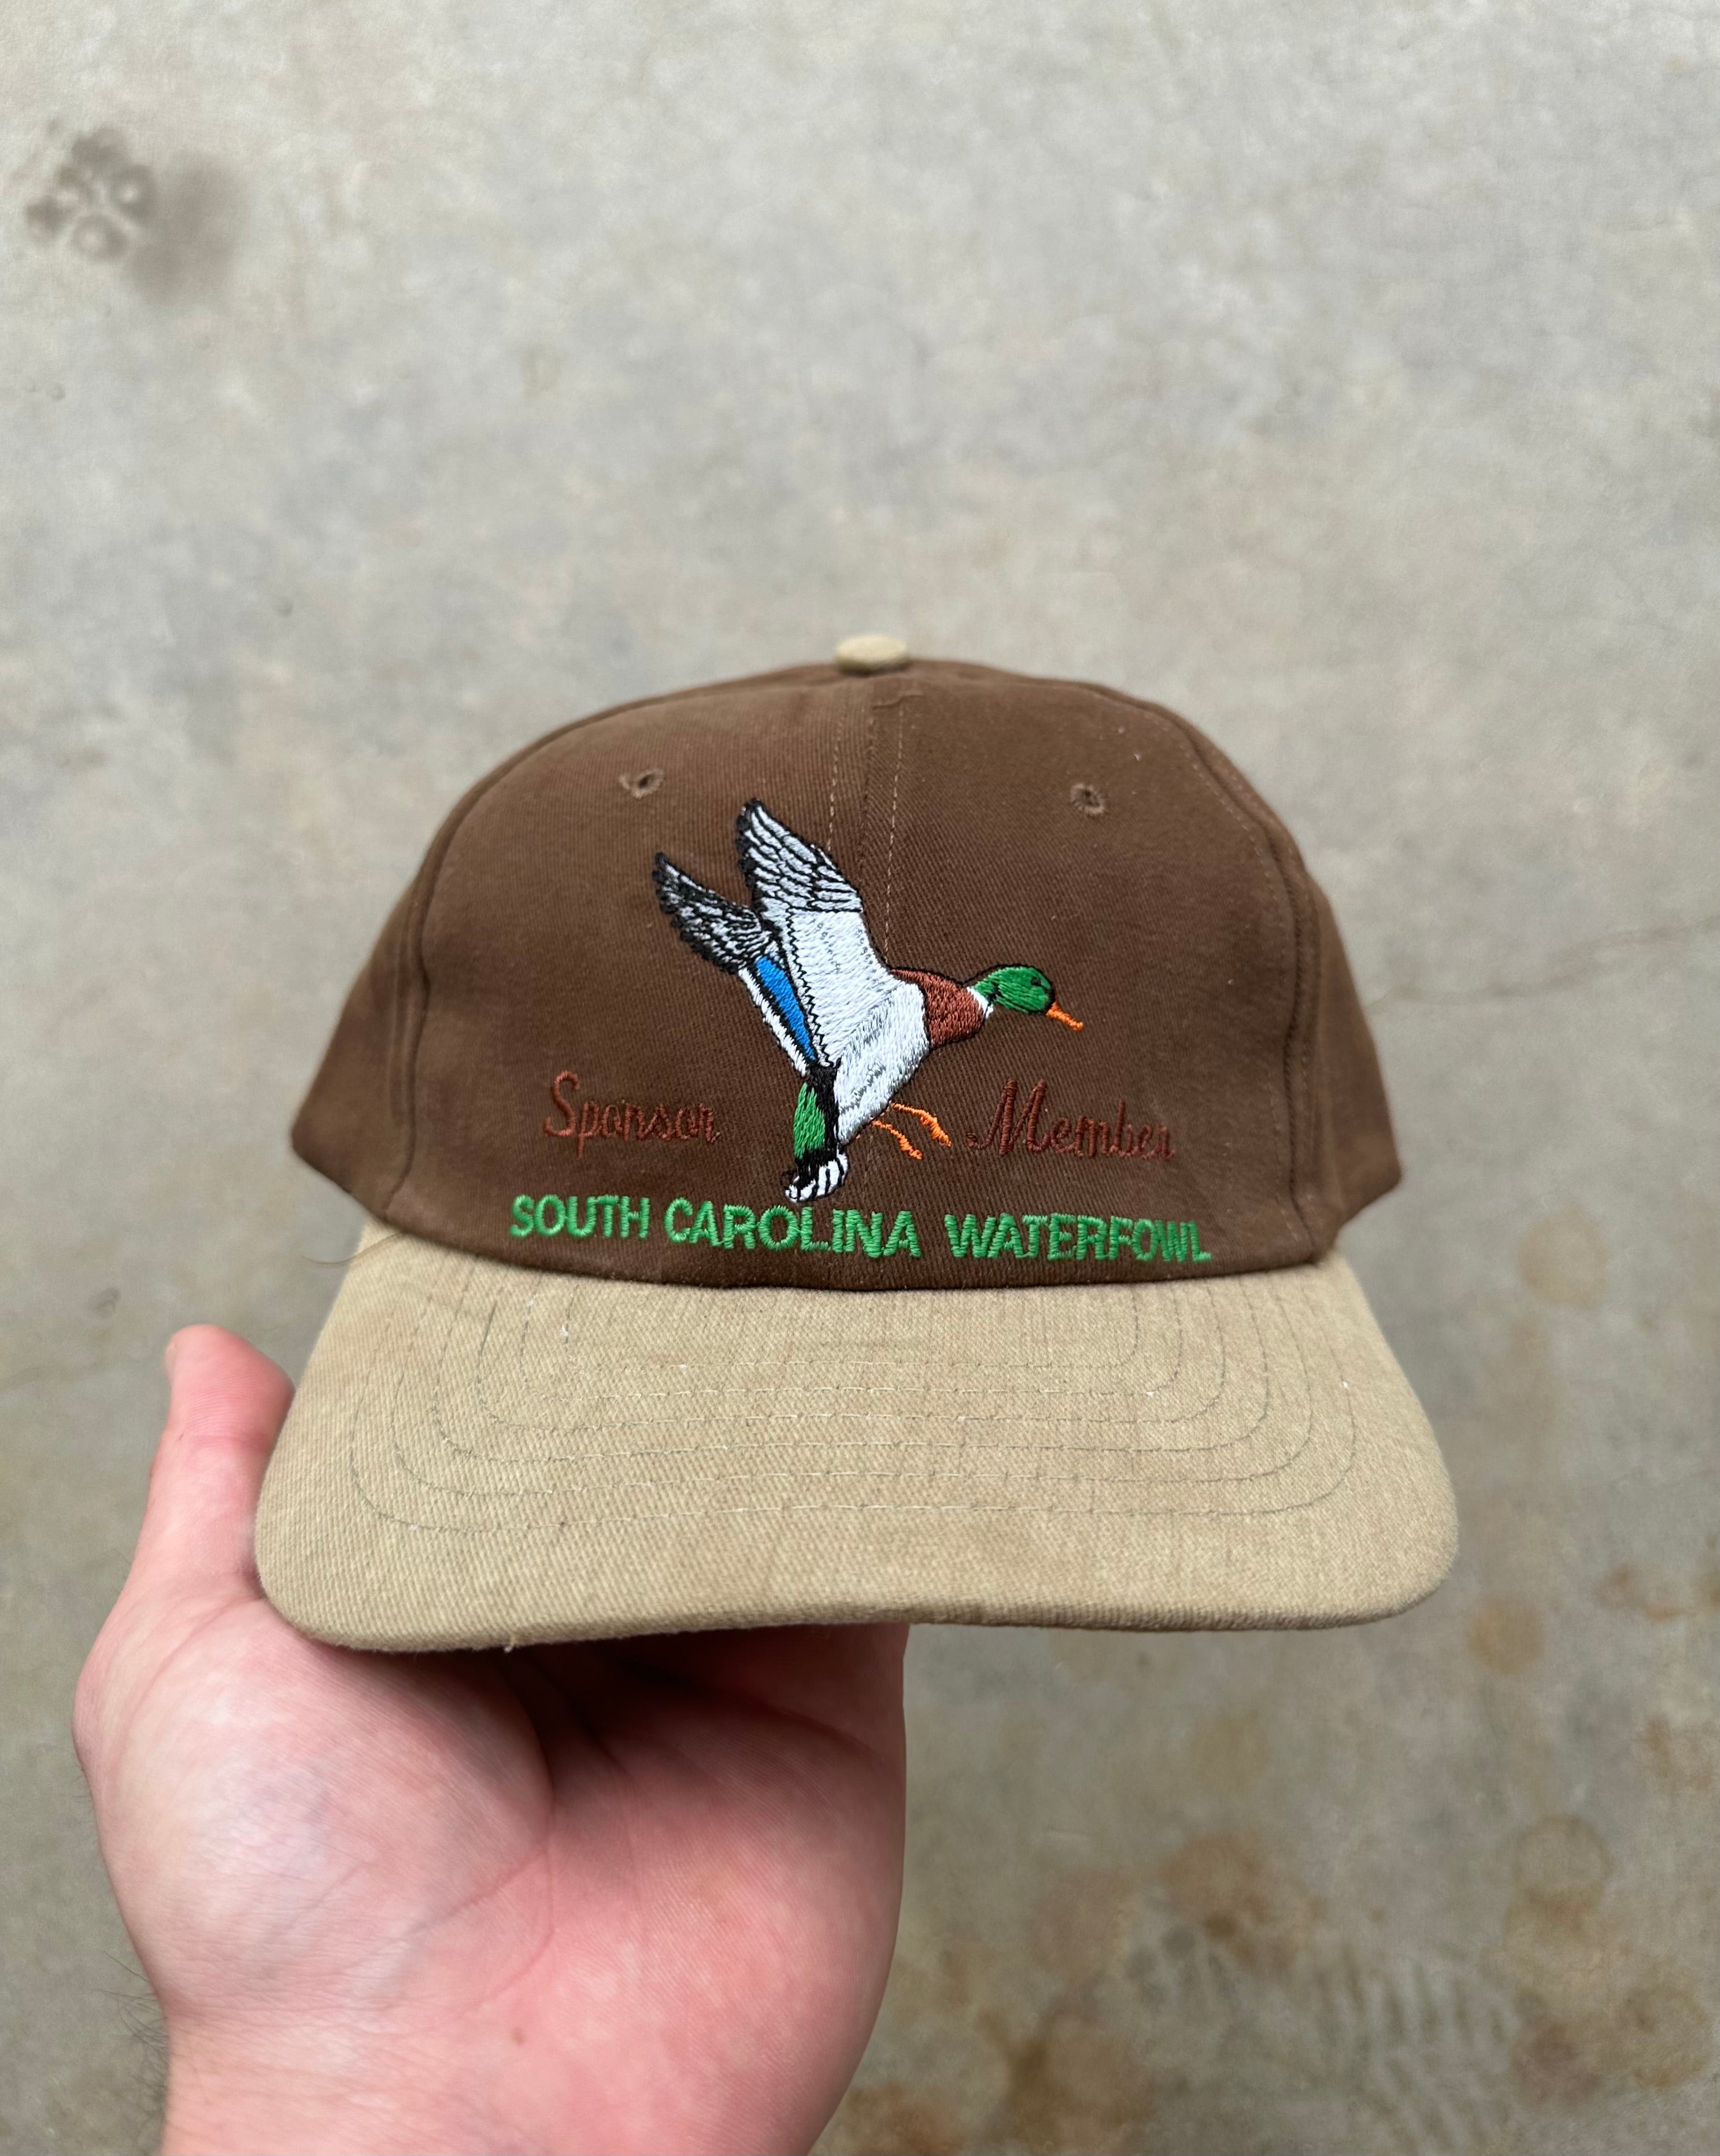 Vintage South Carolina Waterfowl Sponsor Strapback